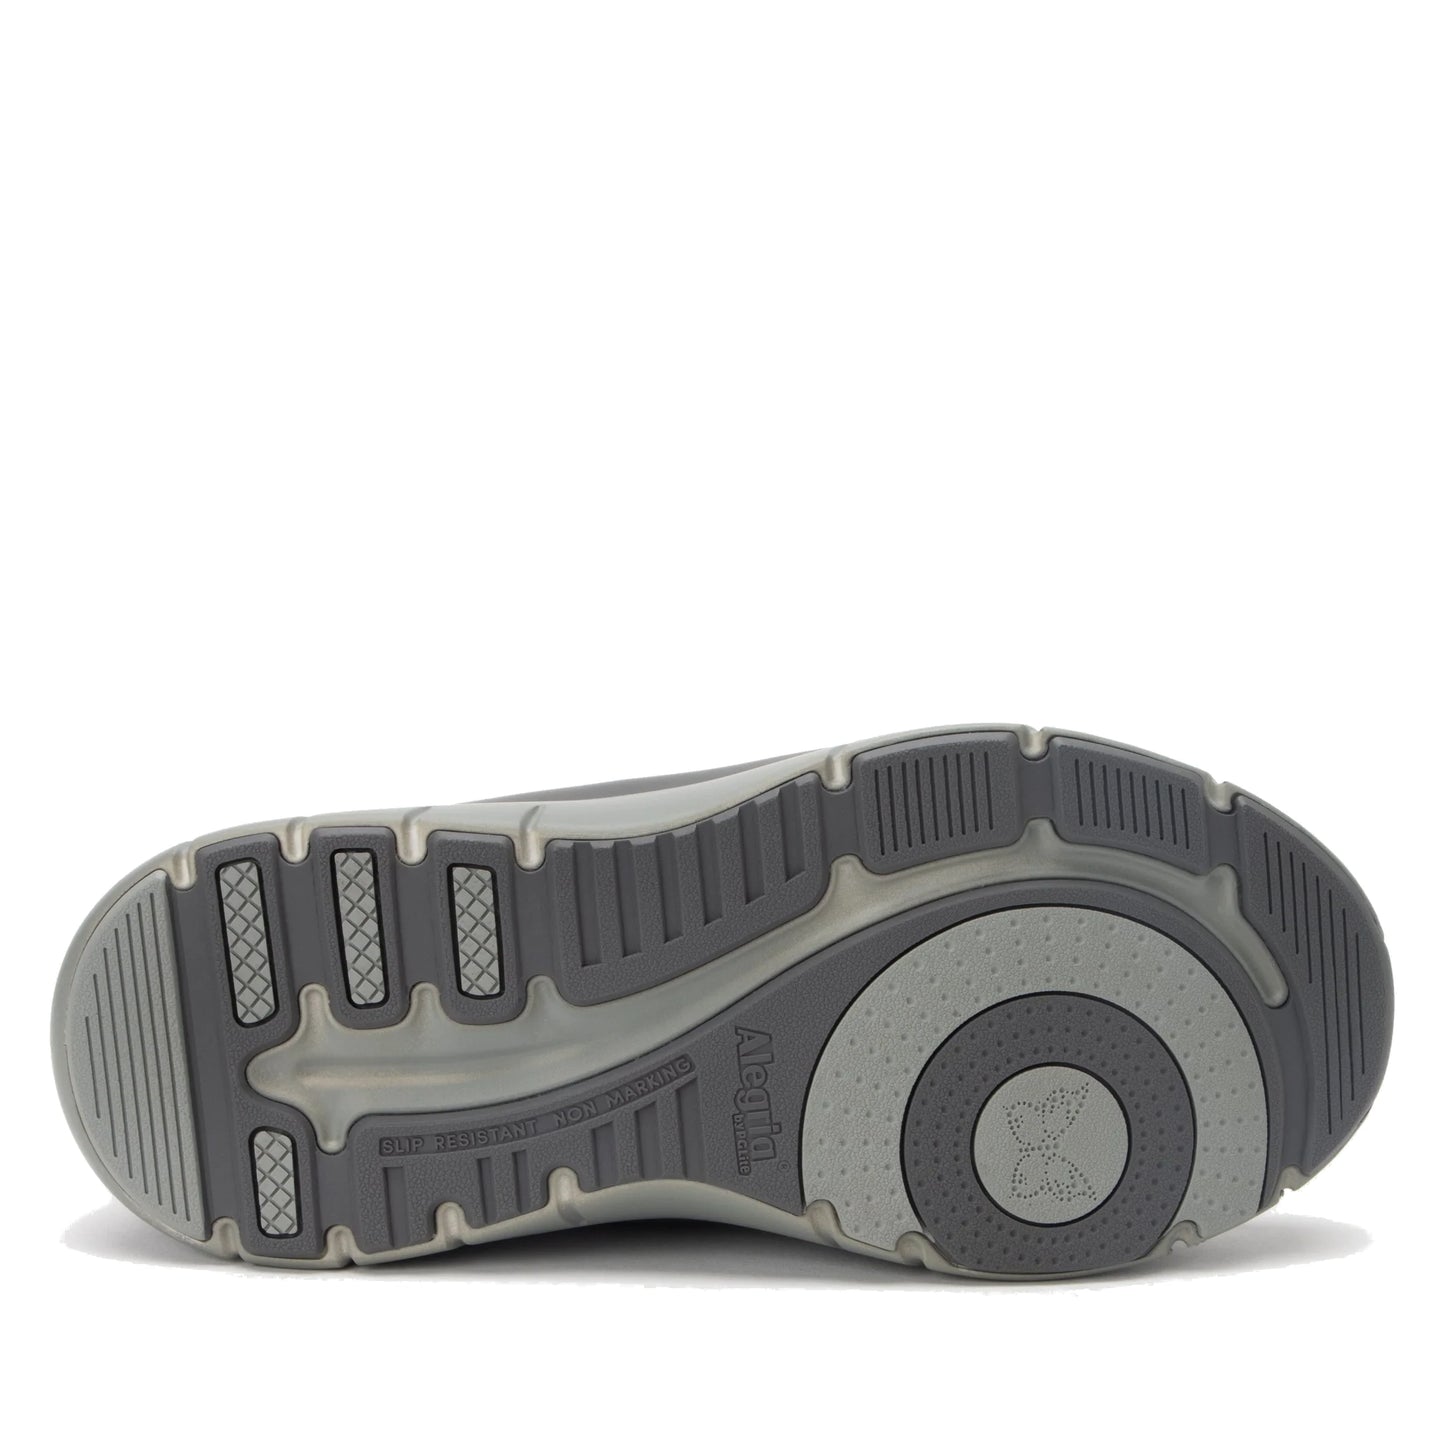 Traq by Alegria Women's Rotation Shoe - Grey